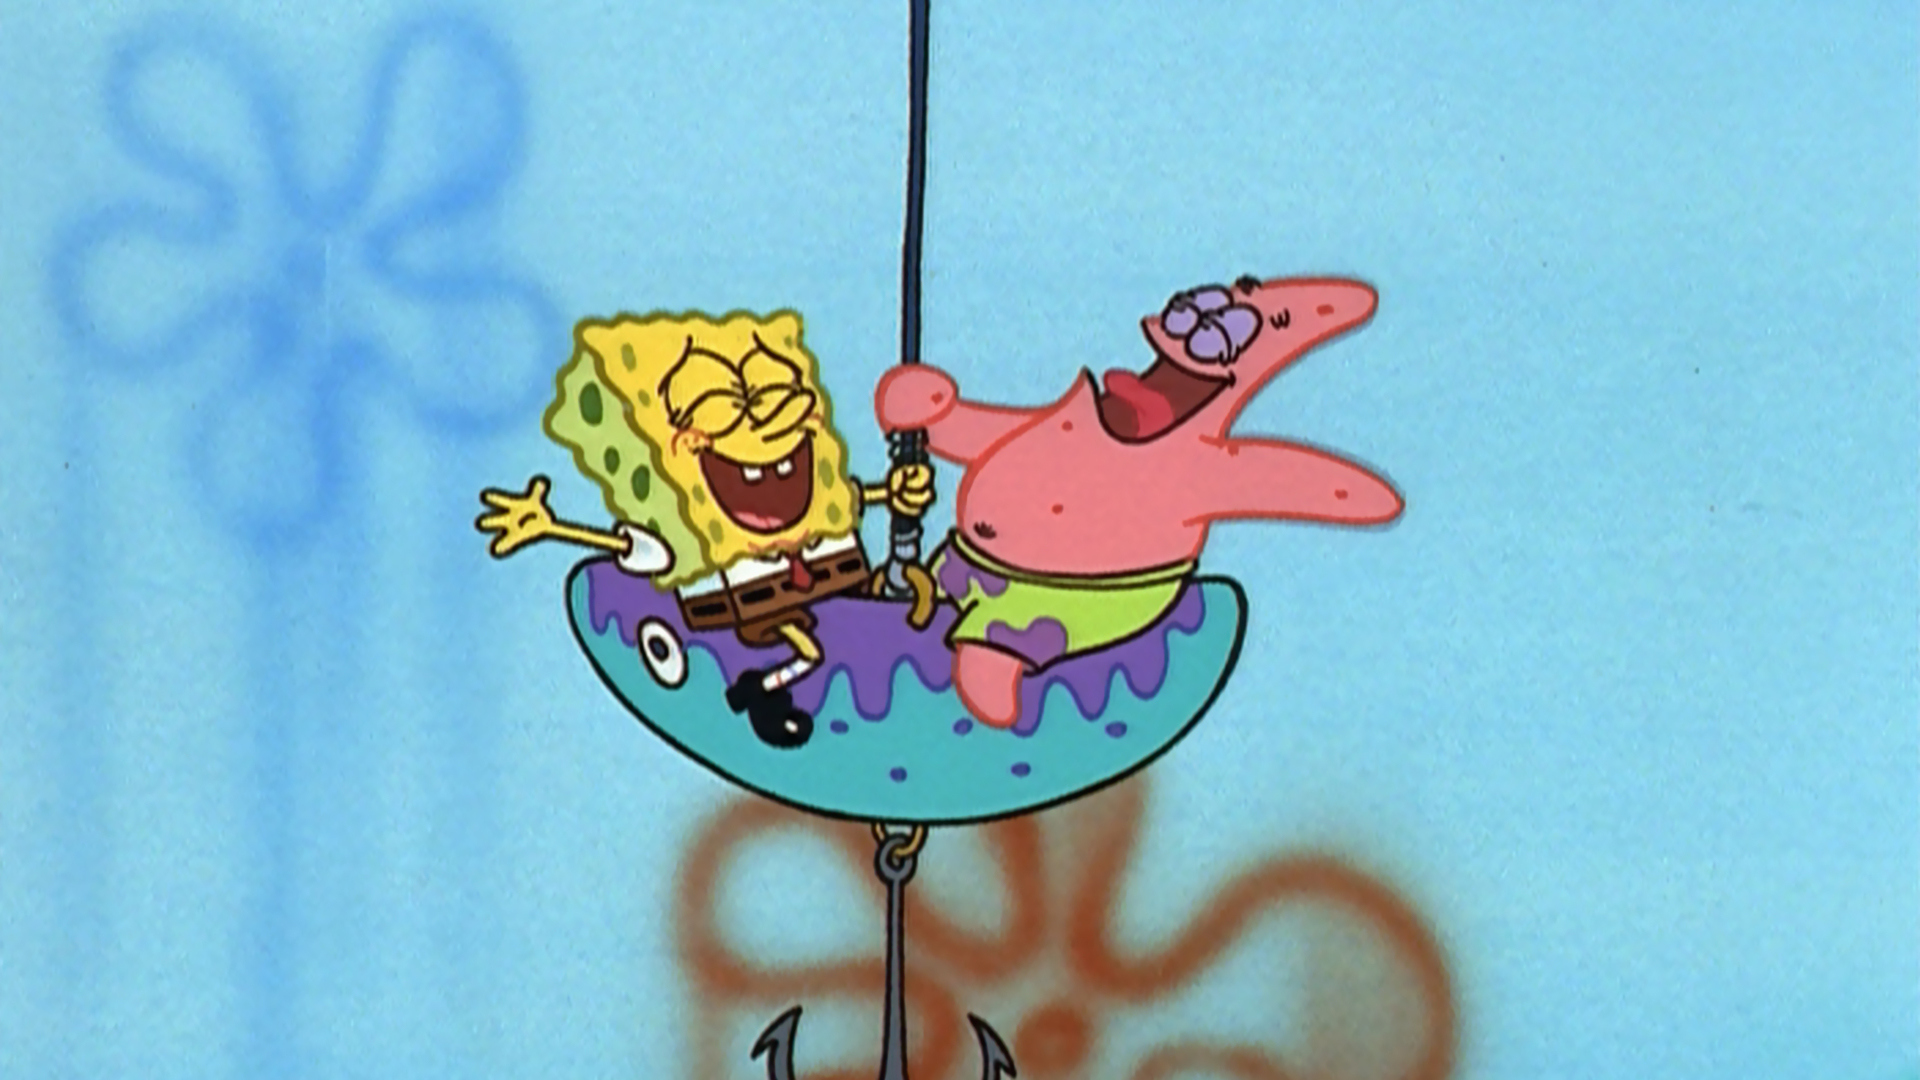 spongebob squarepants season 1 episode 1 full episode free